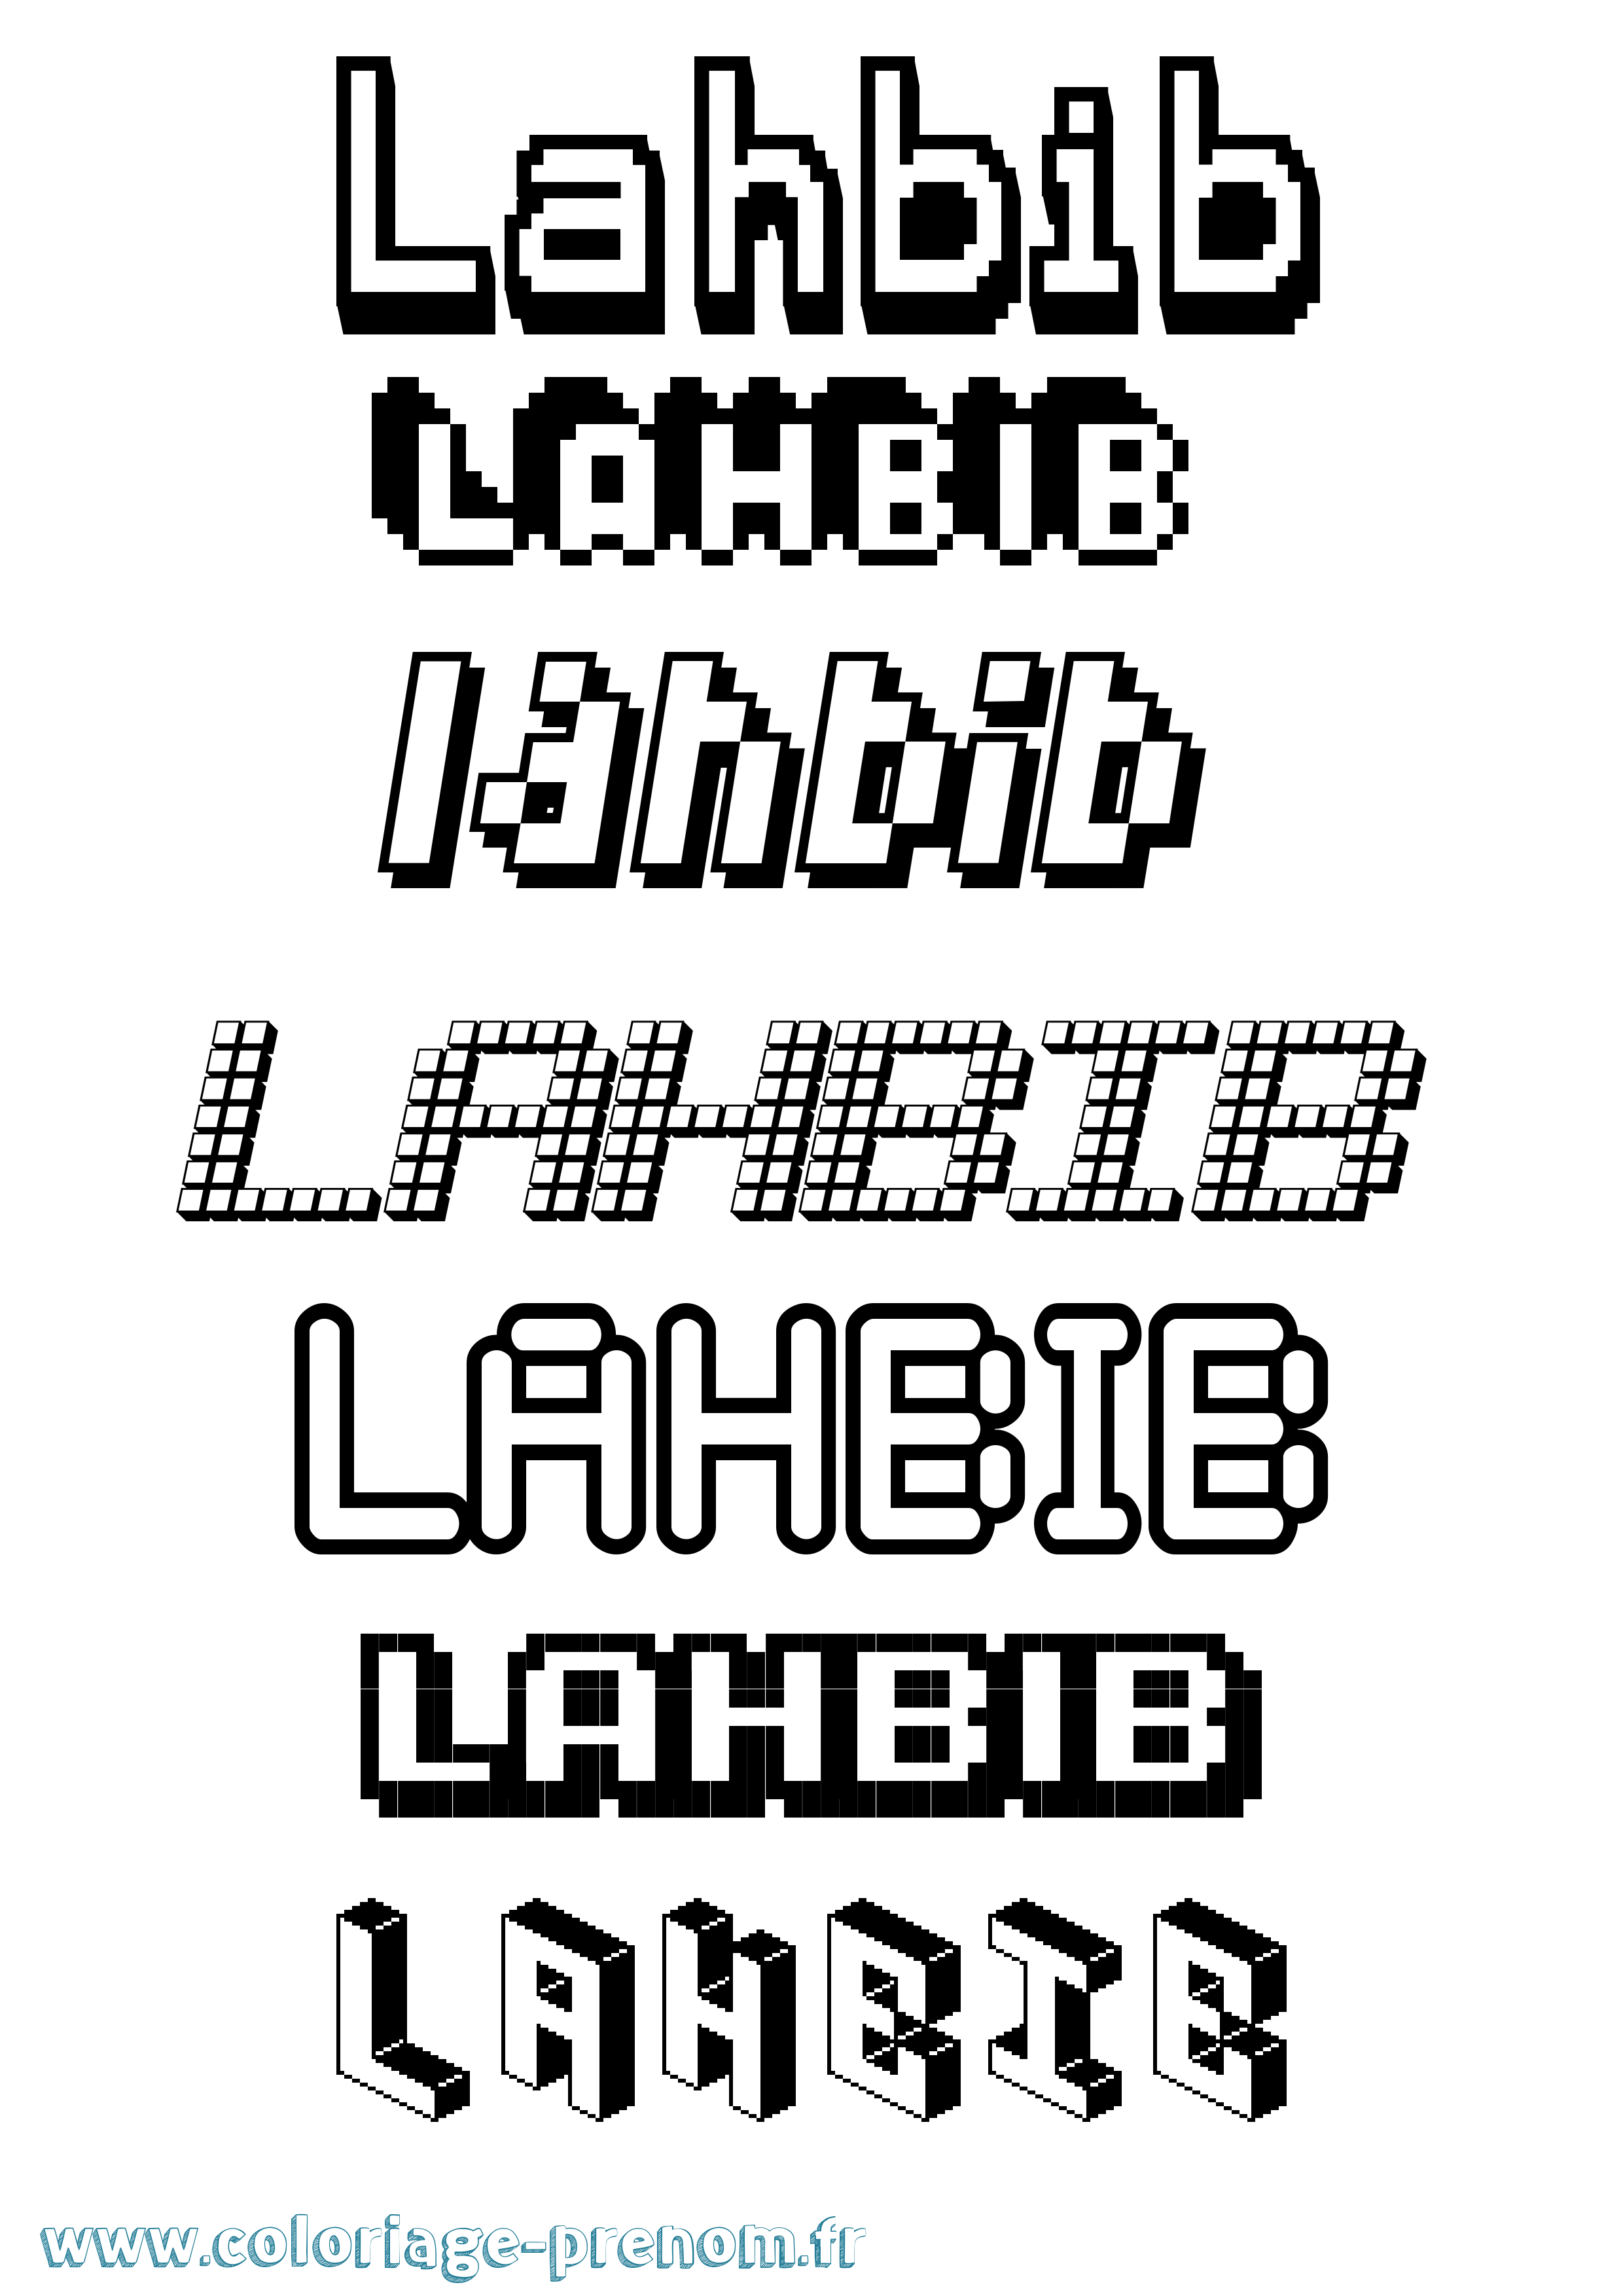 Coloriage prénom Lahbib Pixel